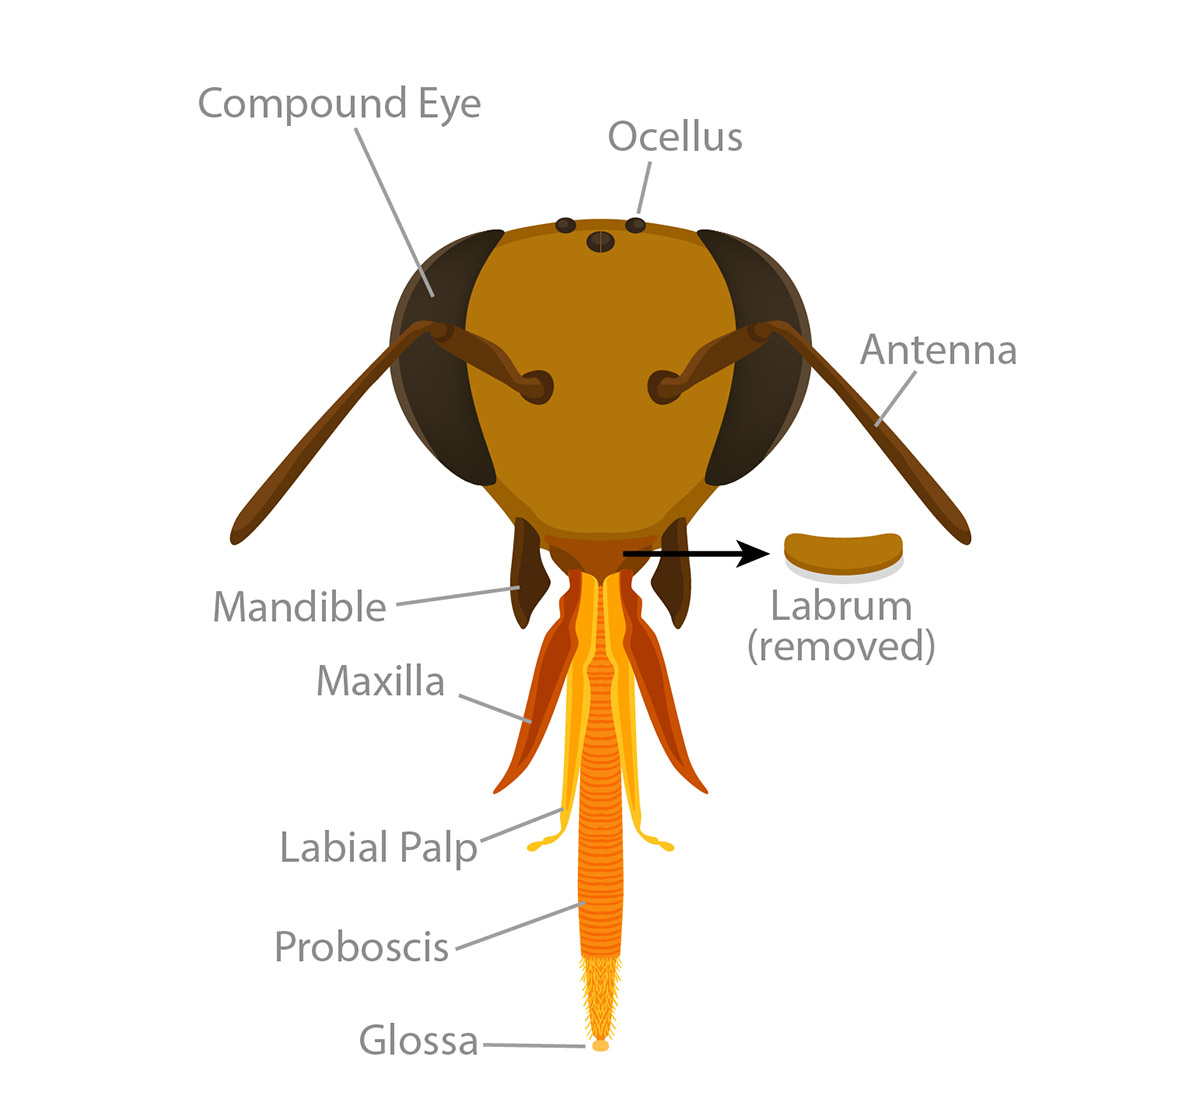 Honey Bee Anatomy | Ask A Biologist